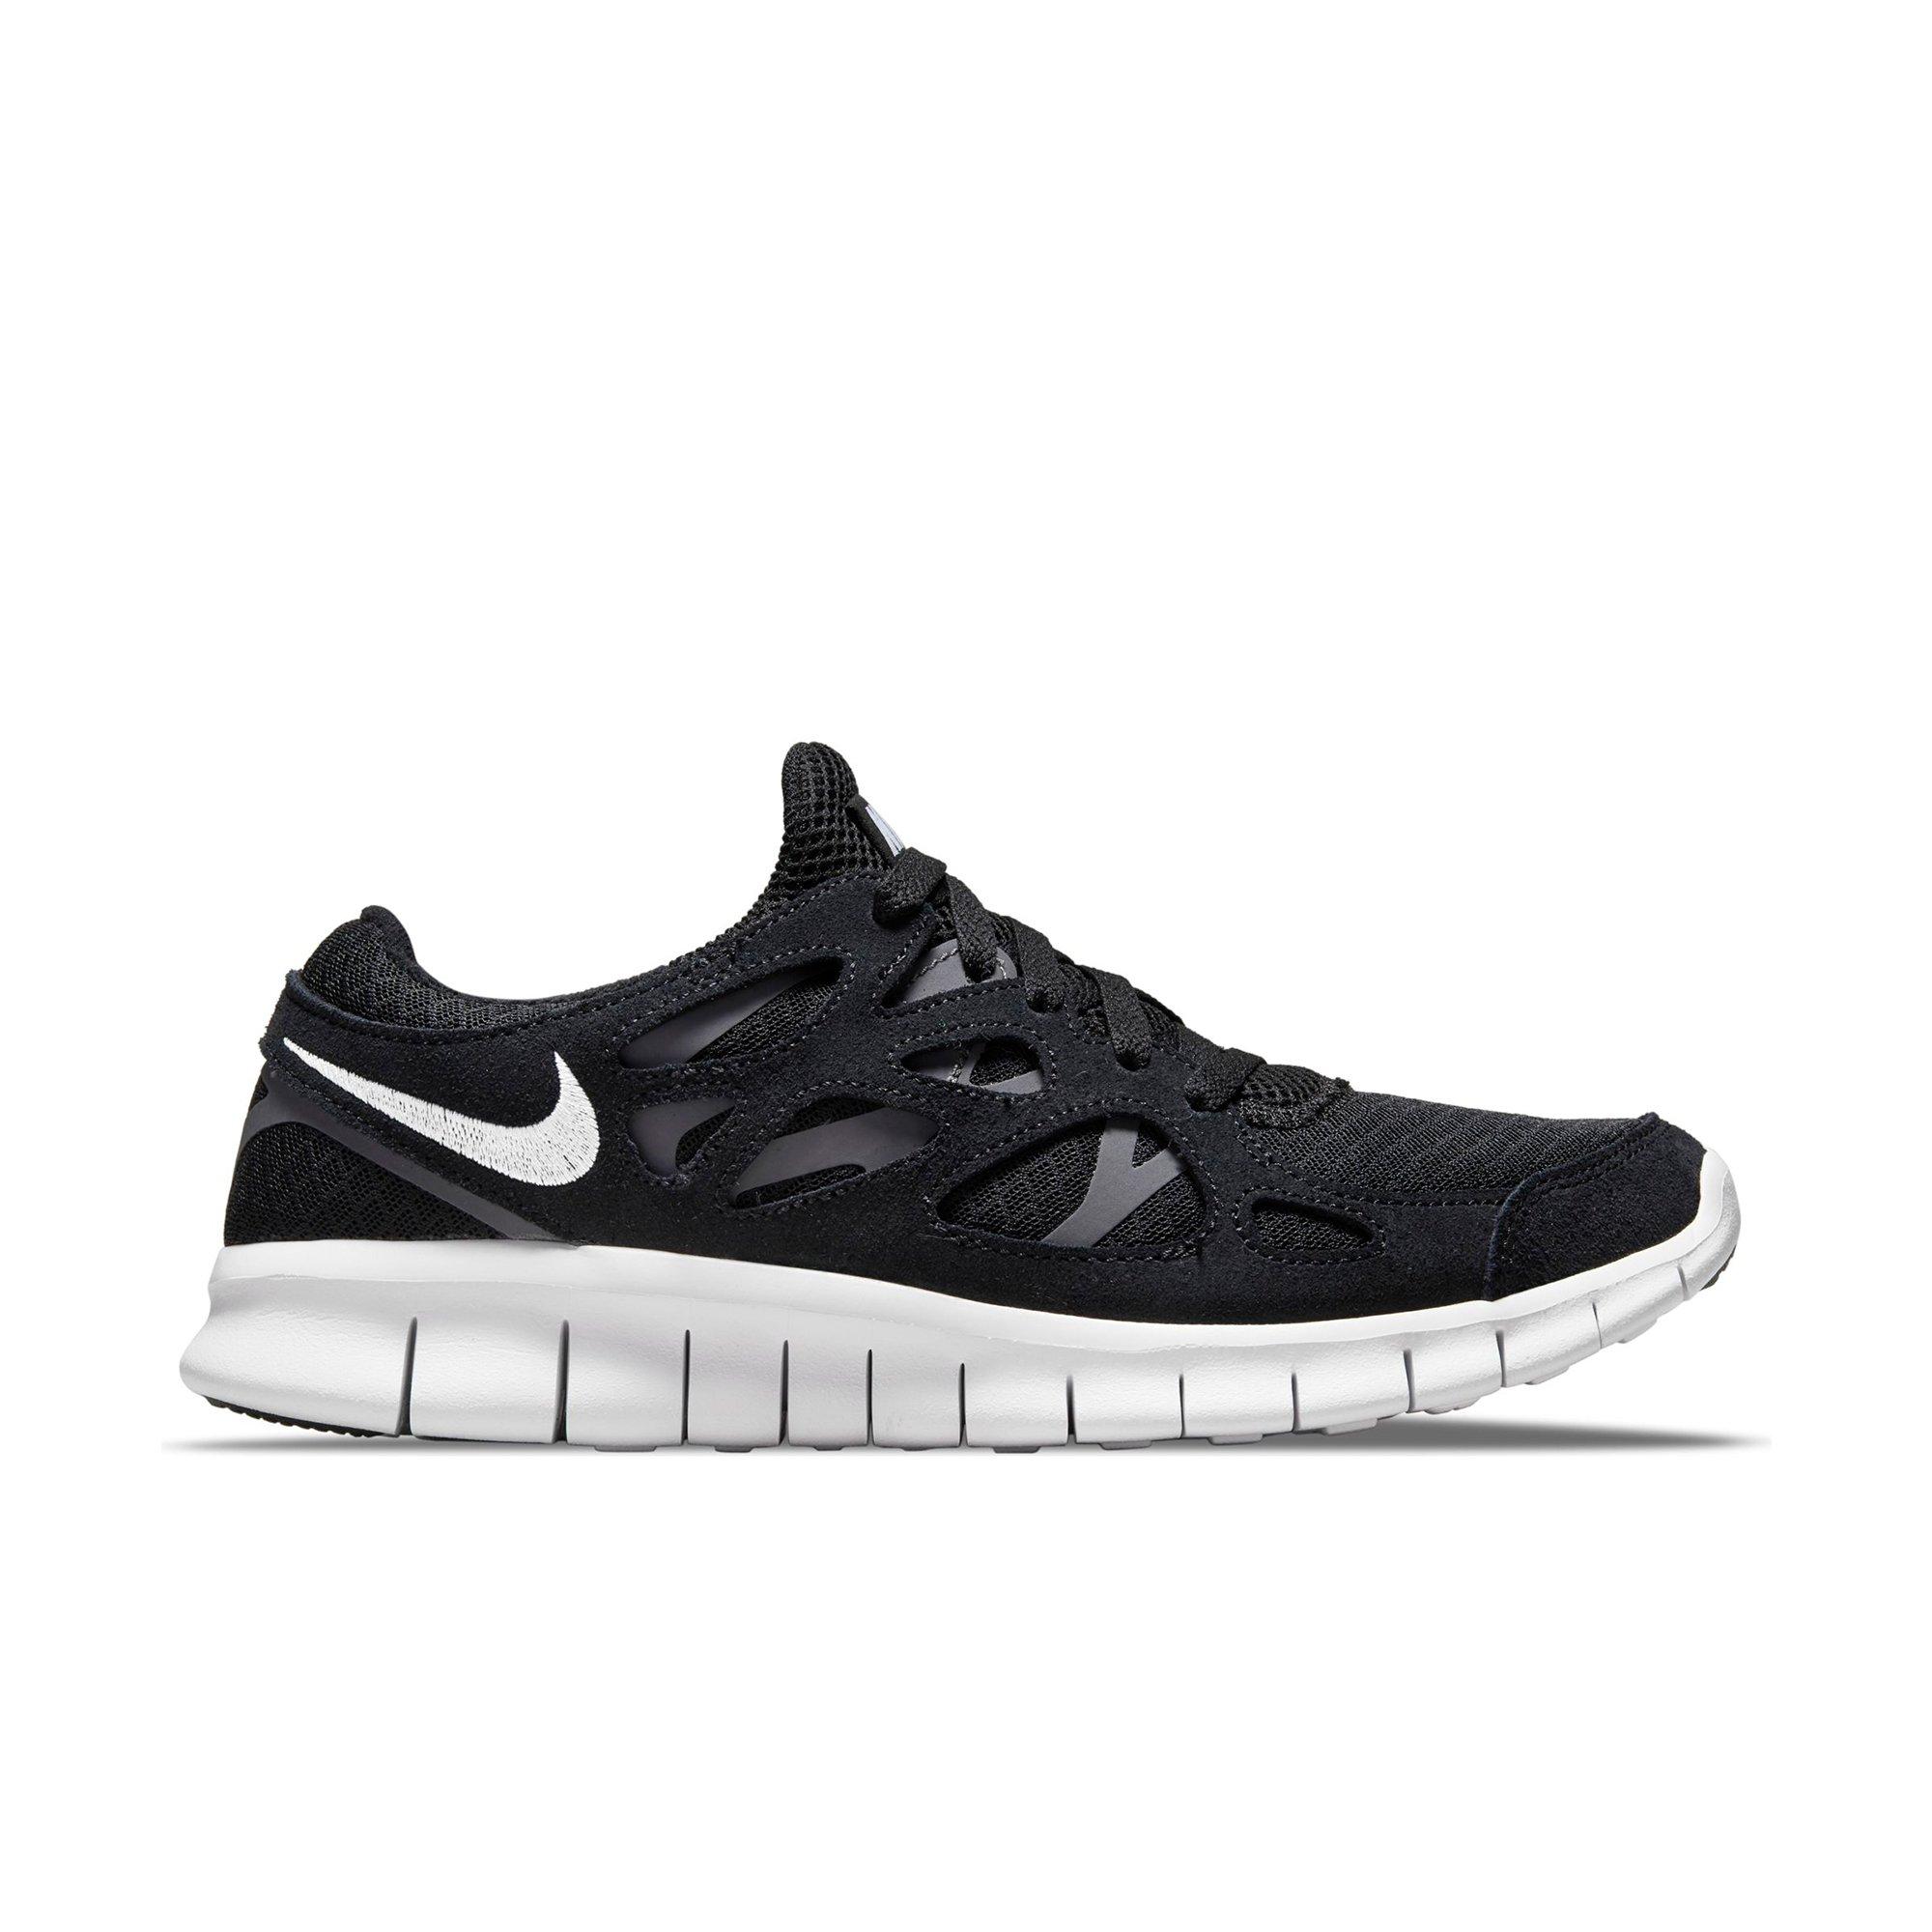 Smelten Downtown gracht Nike Free Run 2.0 "Black/White" Men's Running Shoe